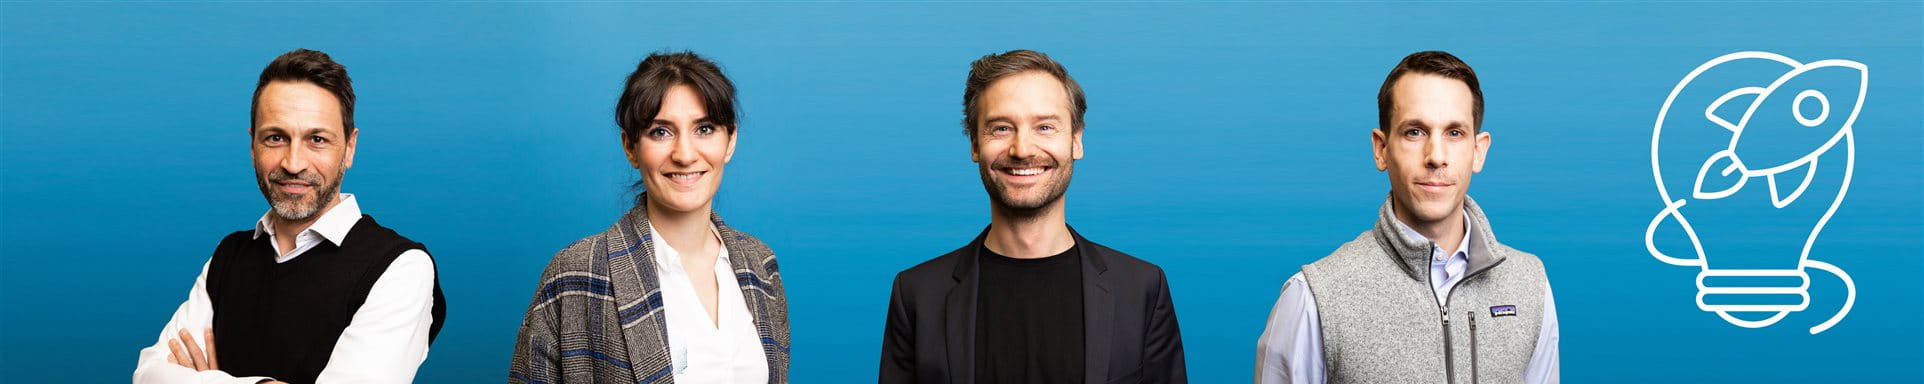 Protagonists of the Zurich Innovation Championship in Switzerland